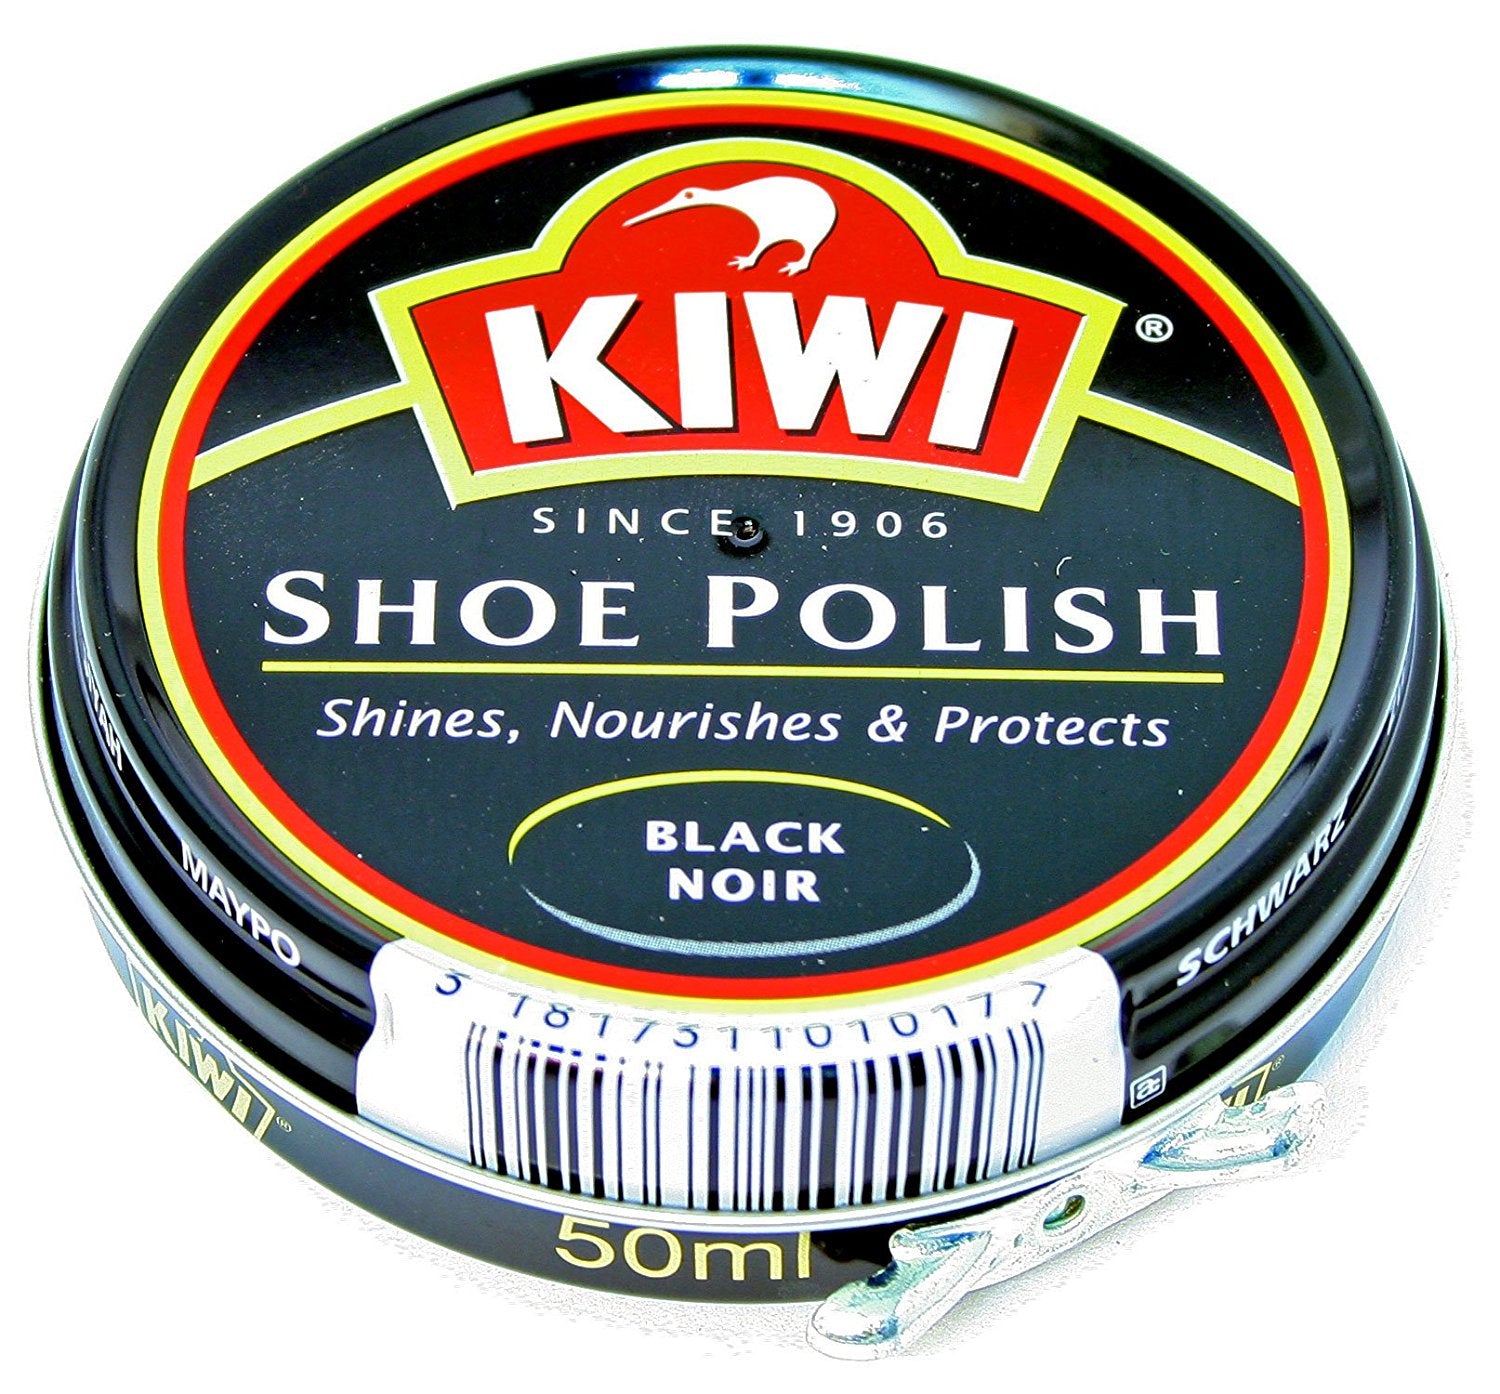 where to buy kiwi shoe polish near me